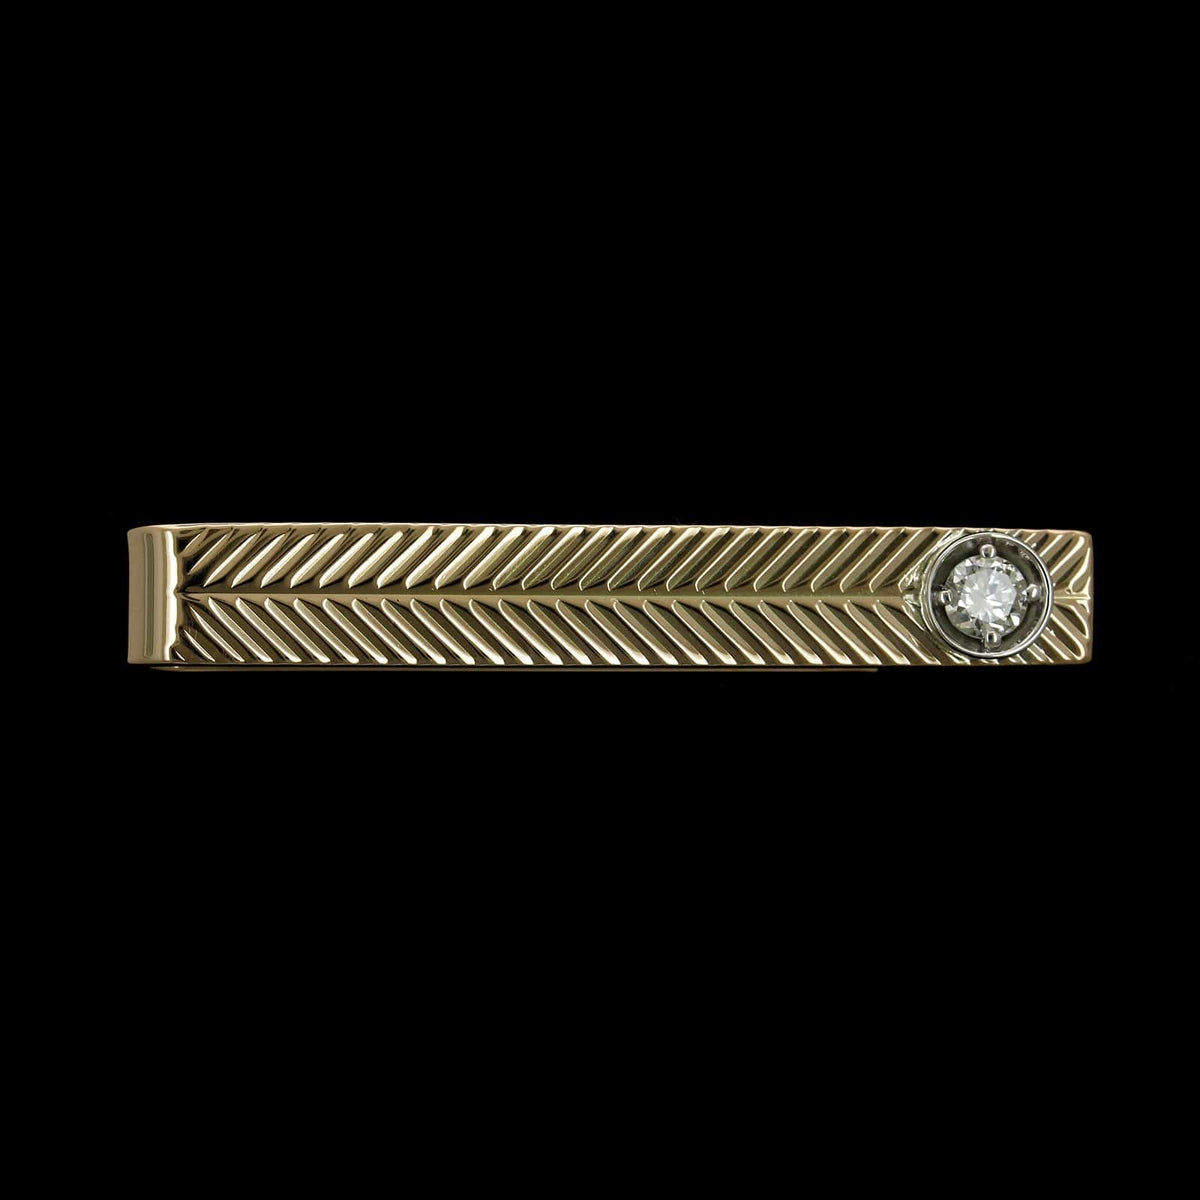 Larter & Sons 14K Two-Tone Gold Estate Tie Bar